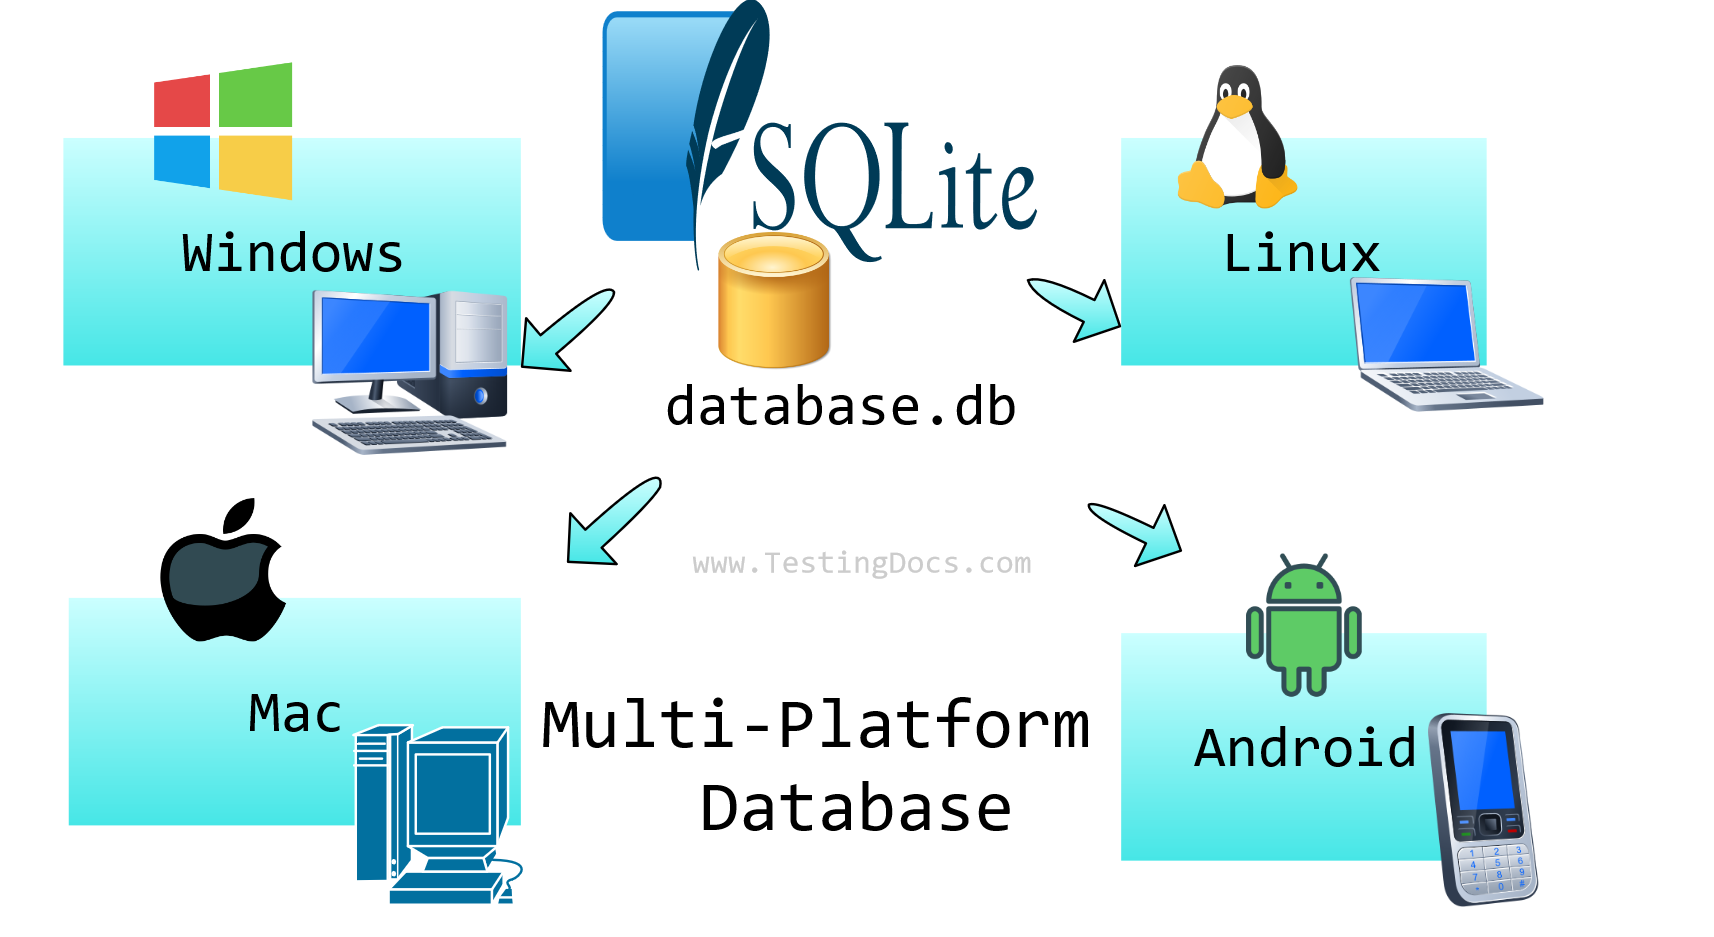 SQLite Multi-Platform Database